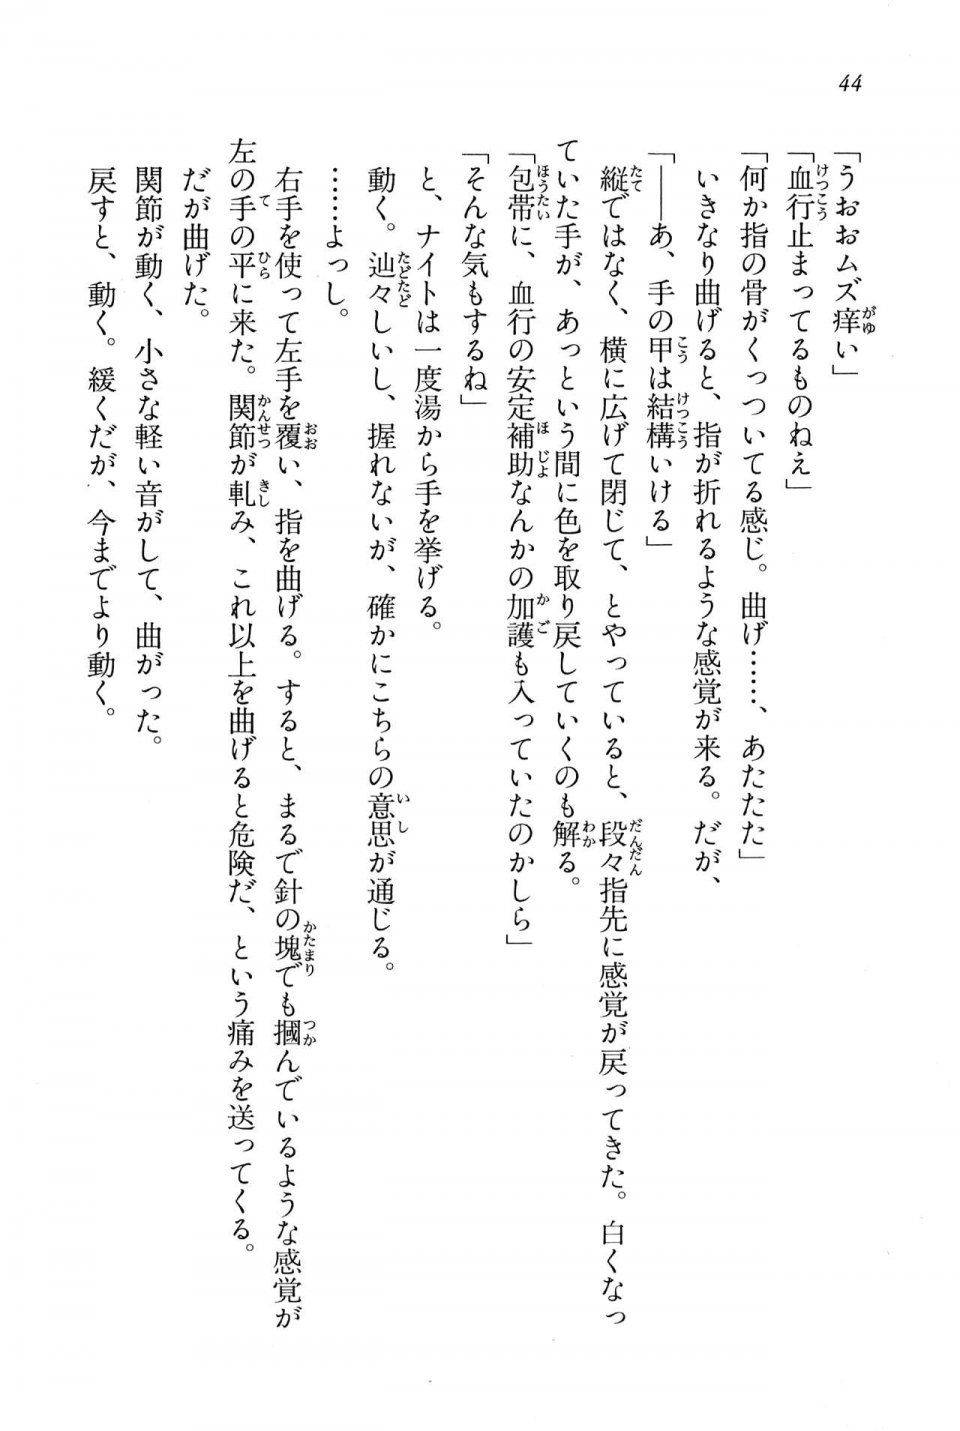 Kyoukai Senjou no Horizon BD Special Mininovel Vol 7(4A) - Photo #48